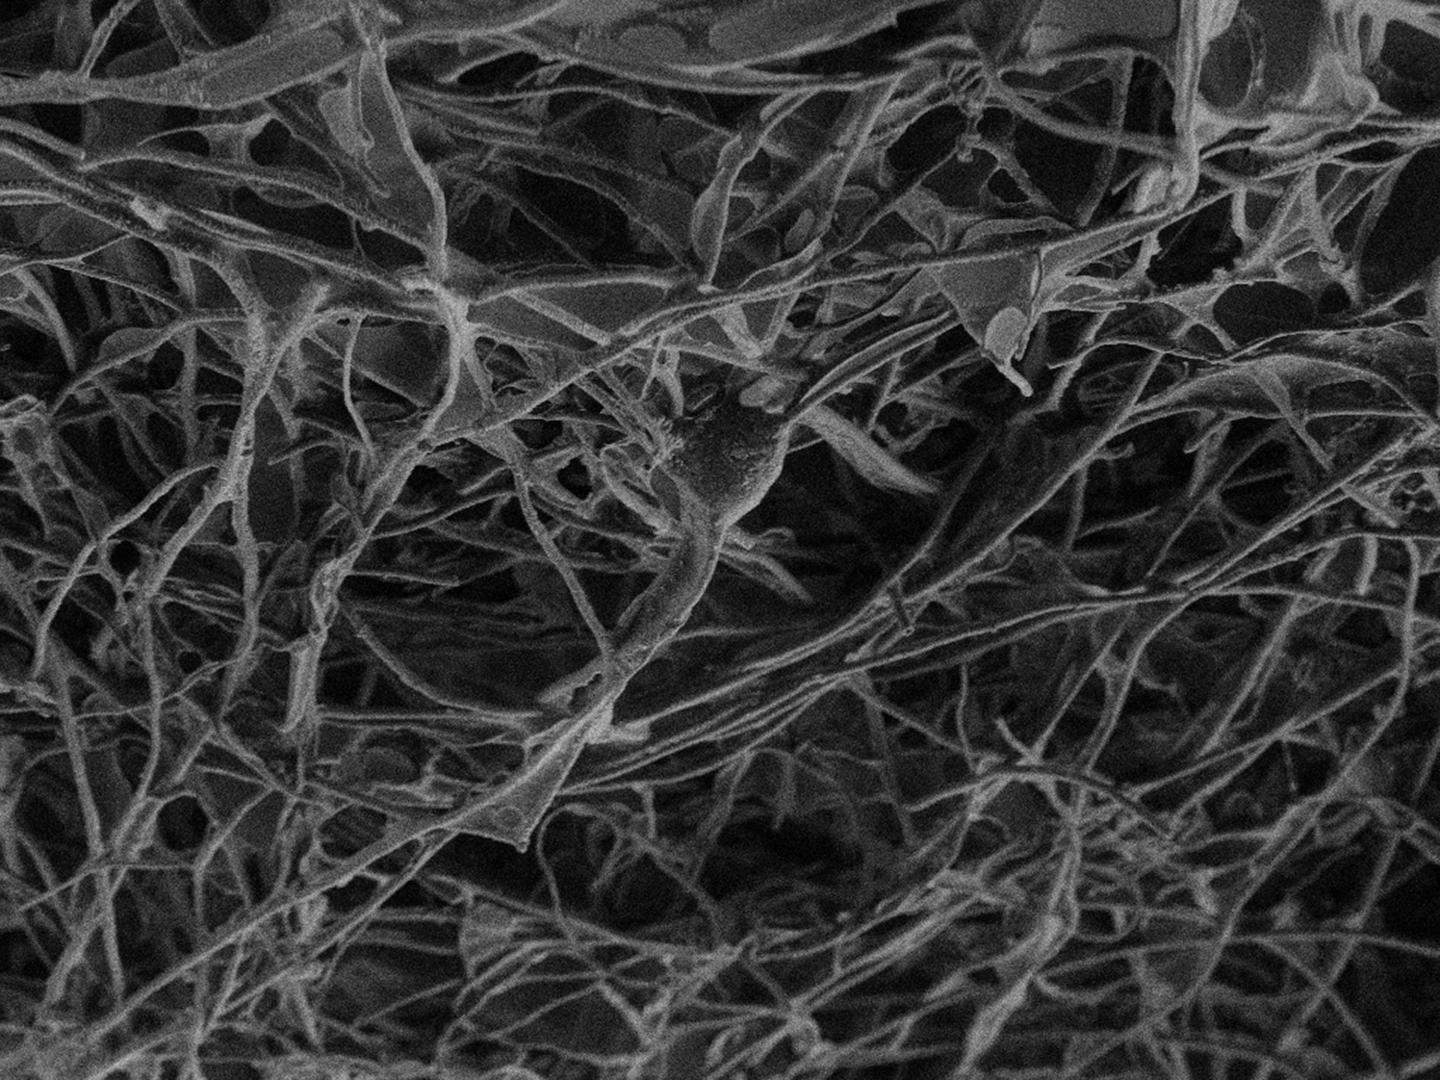 Nanotubes Scaffold (1 of 2)